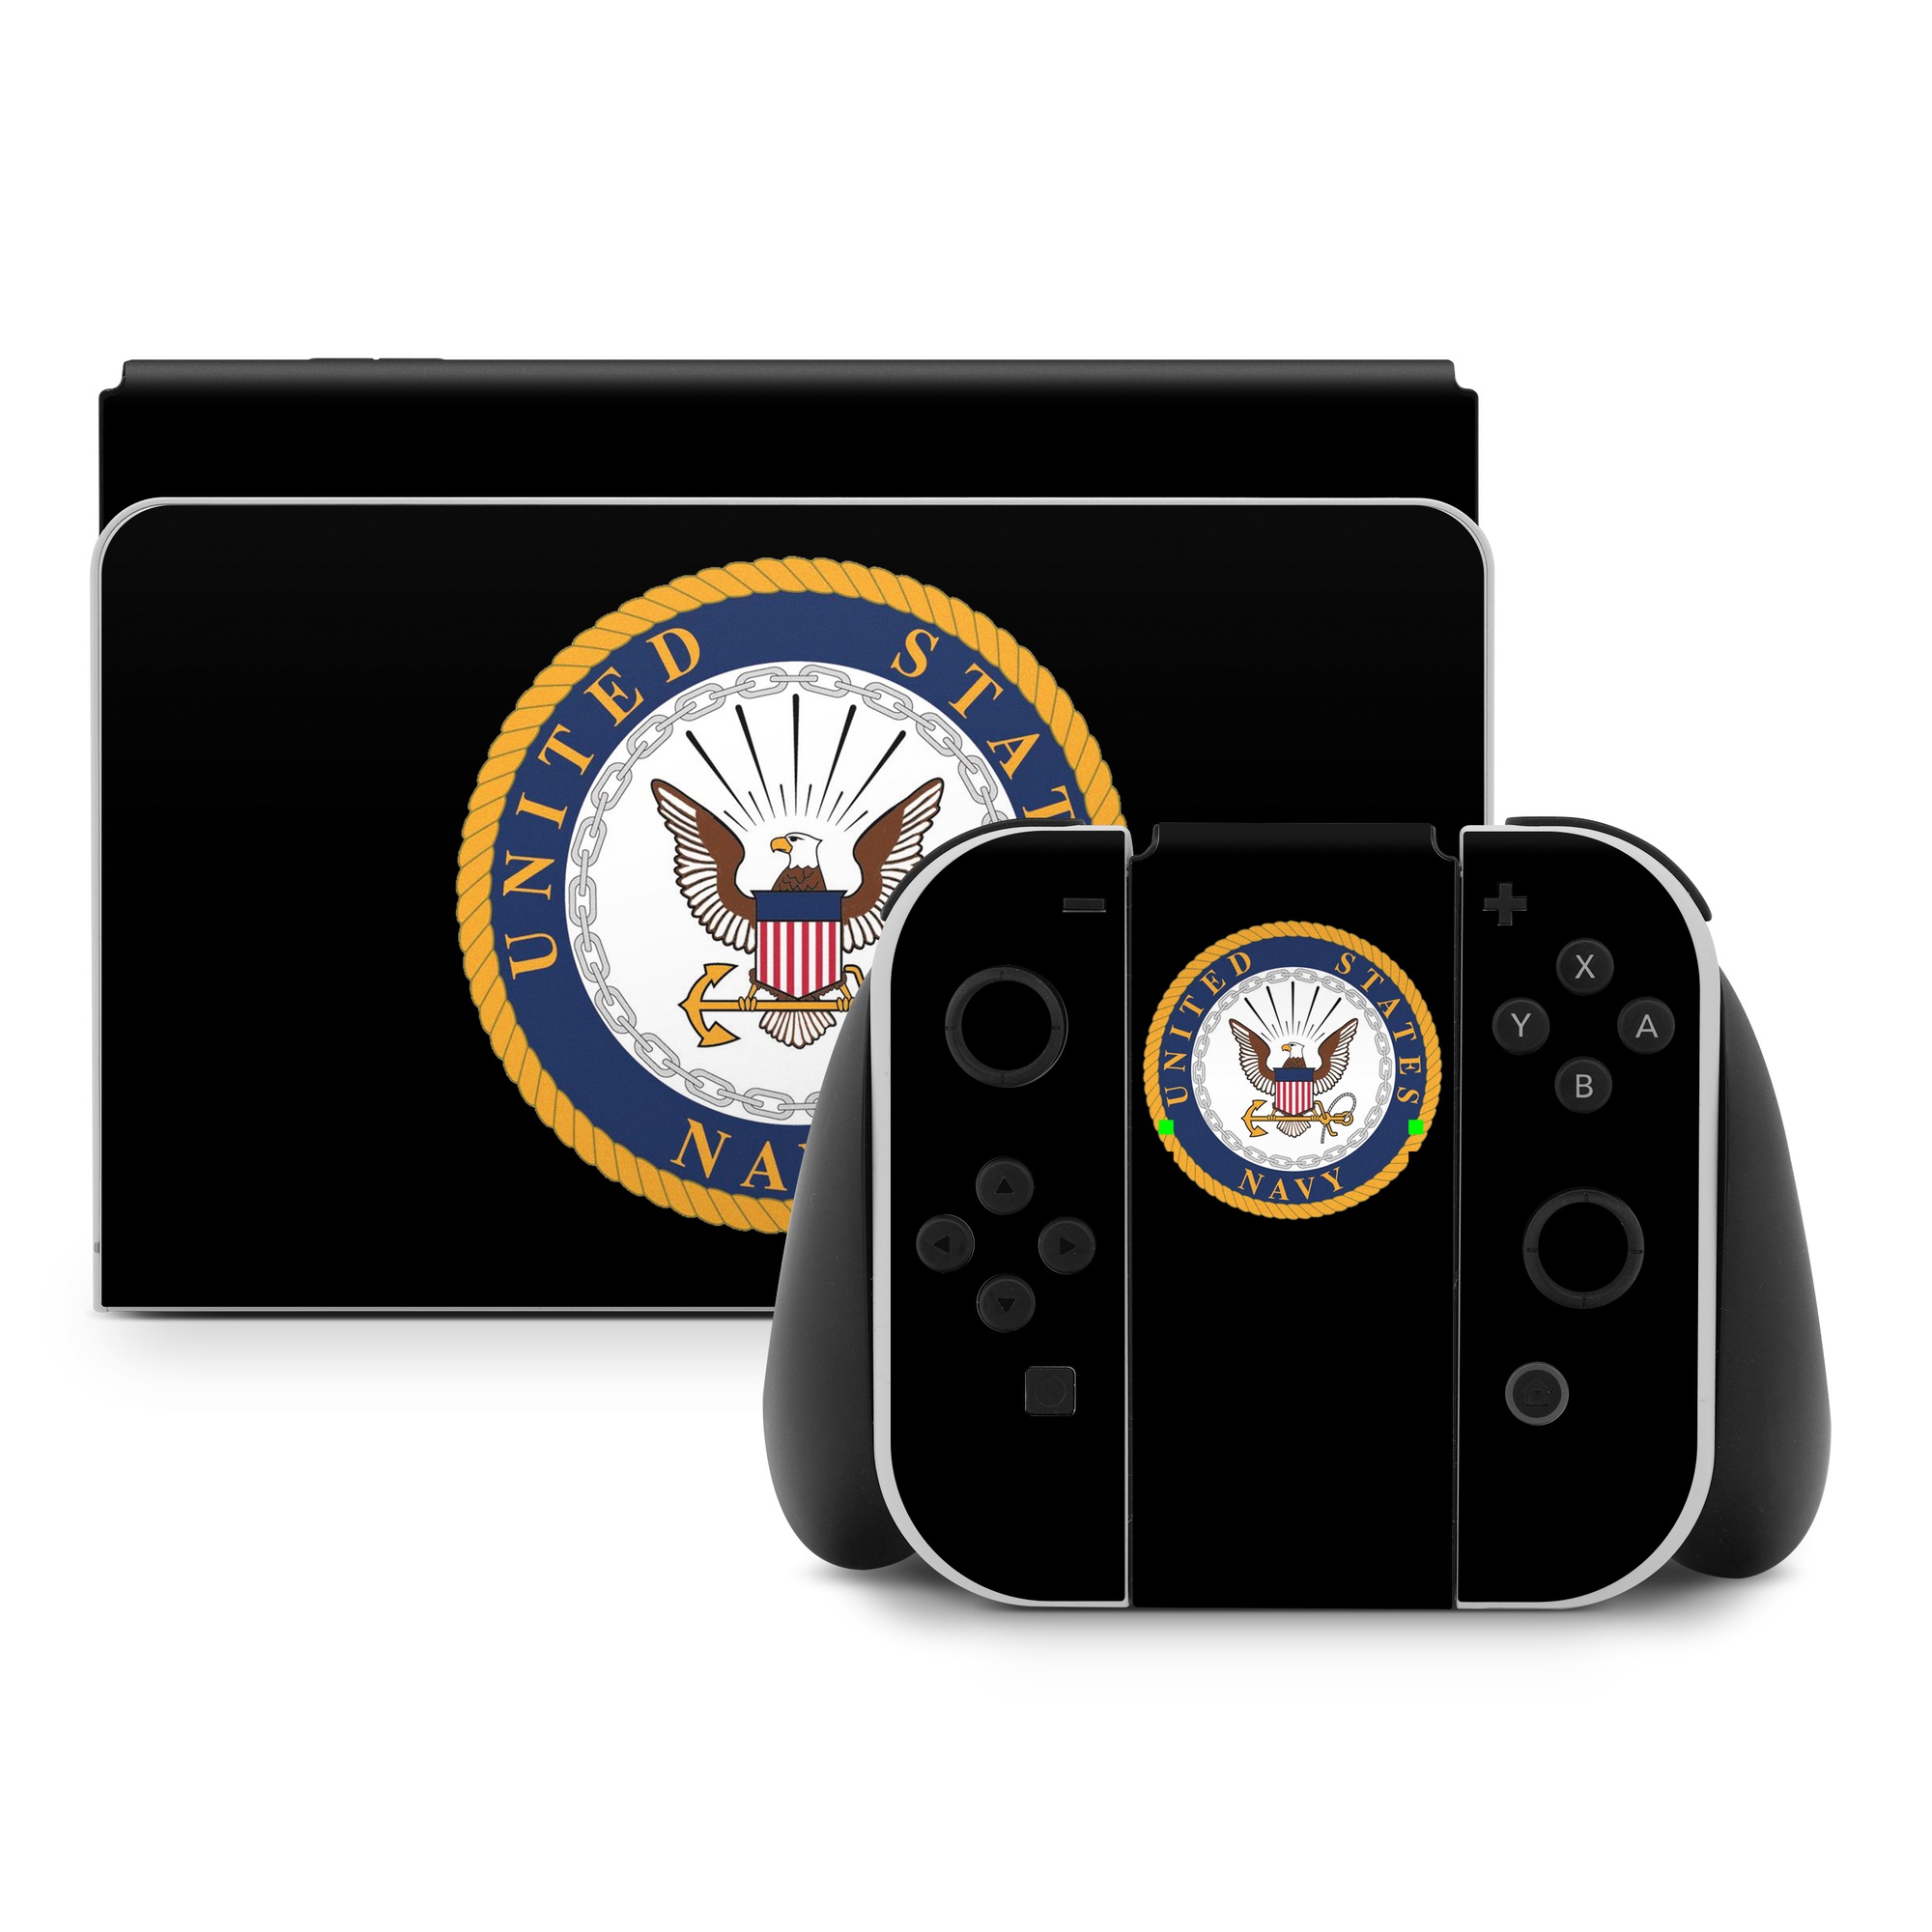 Nintendo Switch Skin design of Emblem, Badge, Symbol, Logo, Crest, Wing, Circle, Illustration, Fashion accessory, Graphics, with black, white, gray, green, orange, red colors